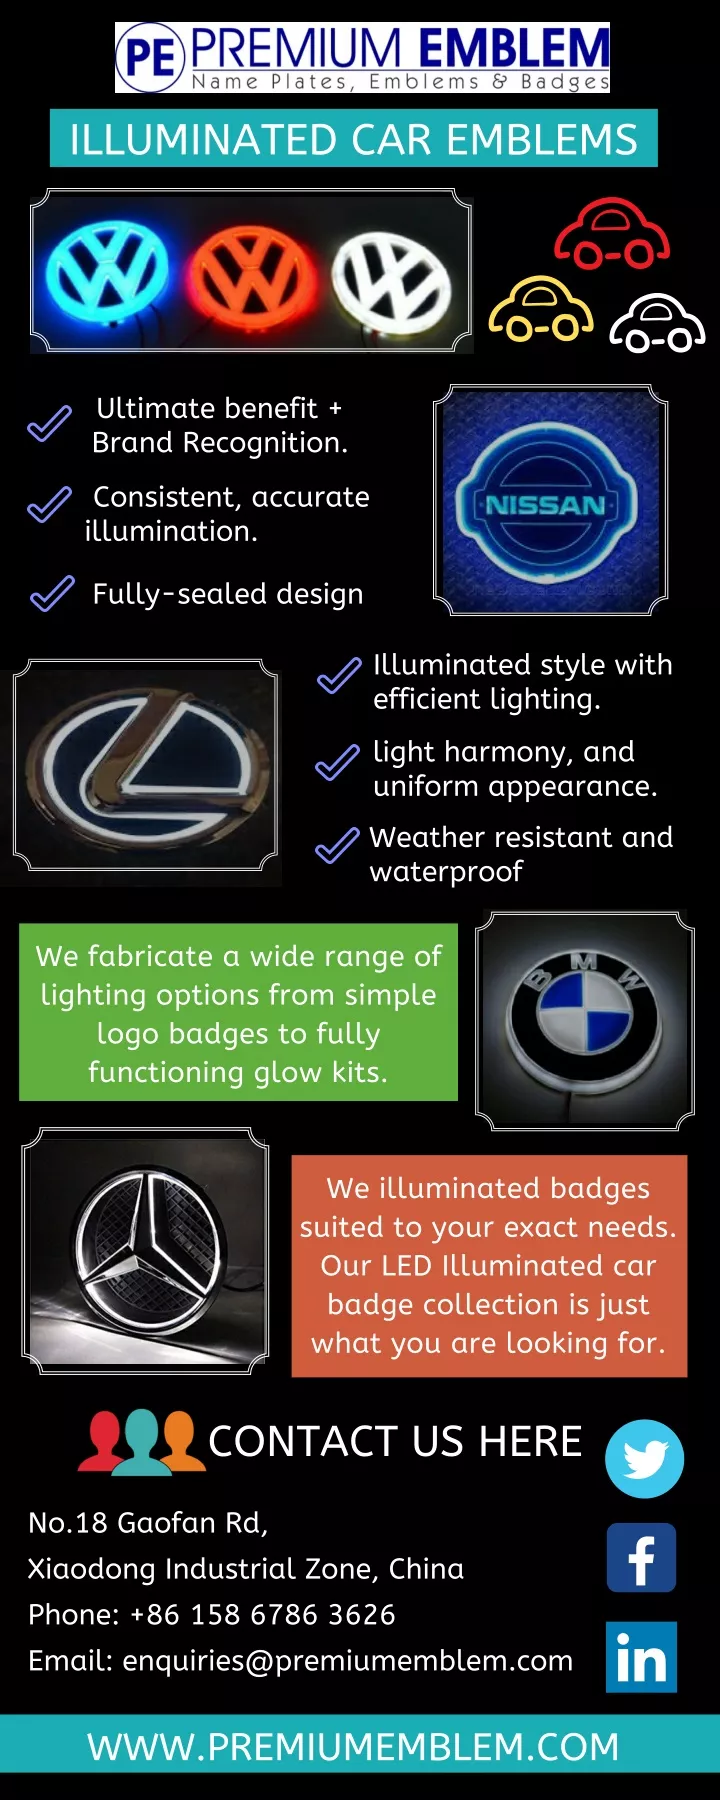 illuminated car emblems